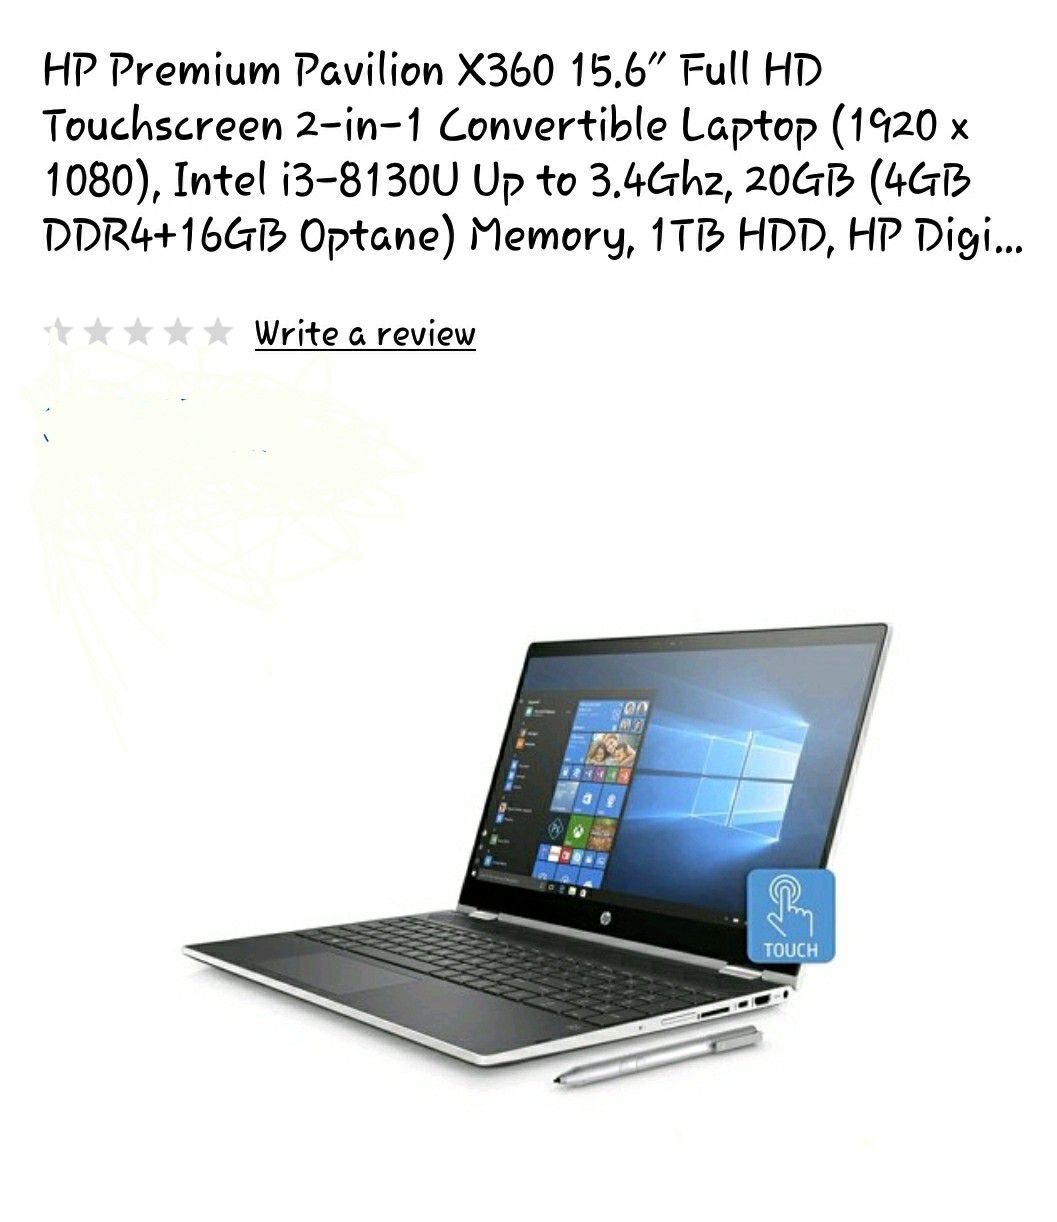 HP Pavilion X360 15.6" Full HD Convertible Touchscreen w/ Digital Pen Windows 10